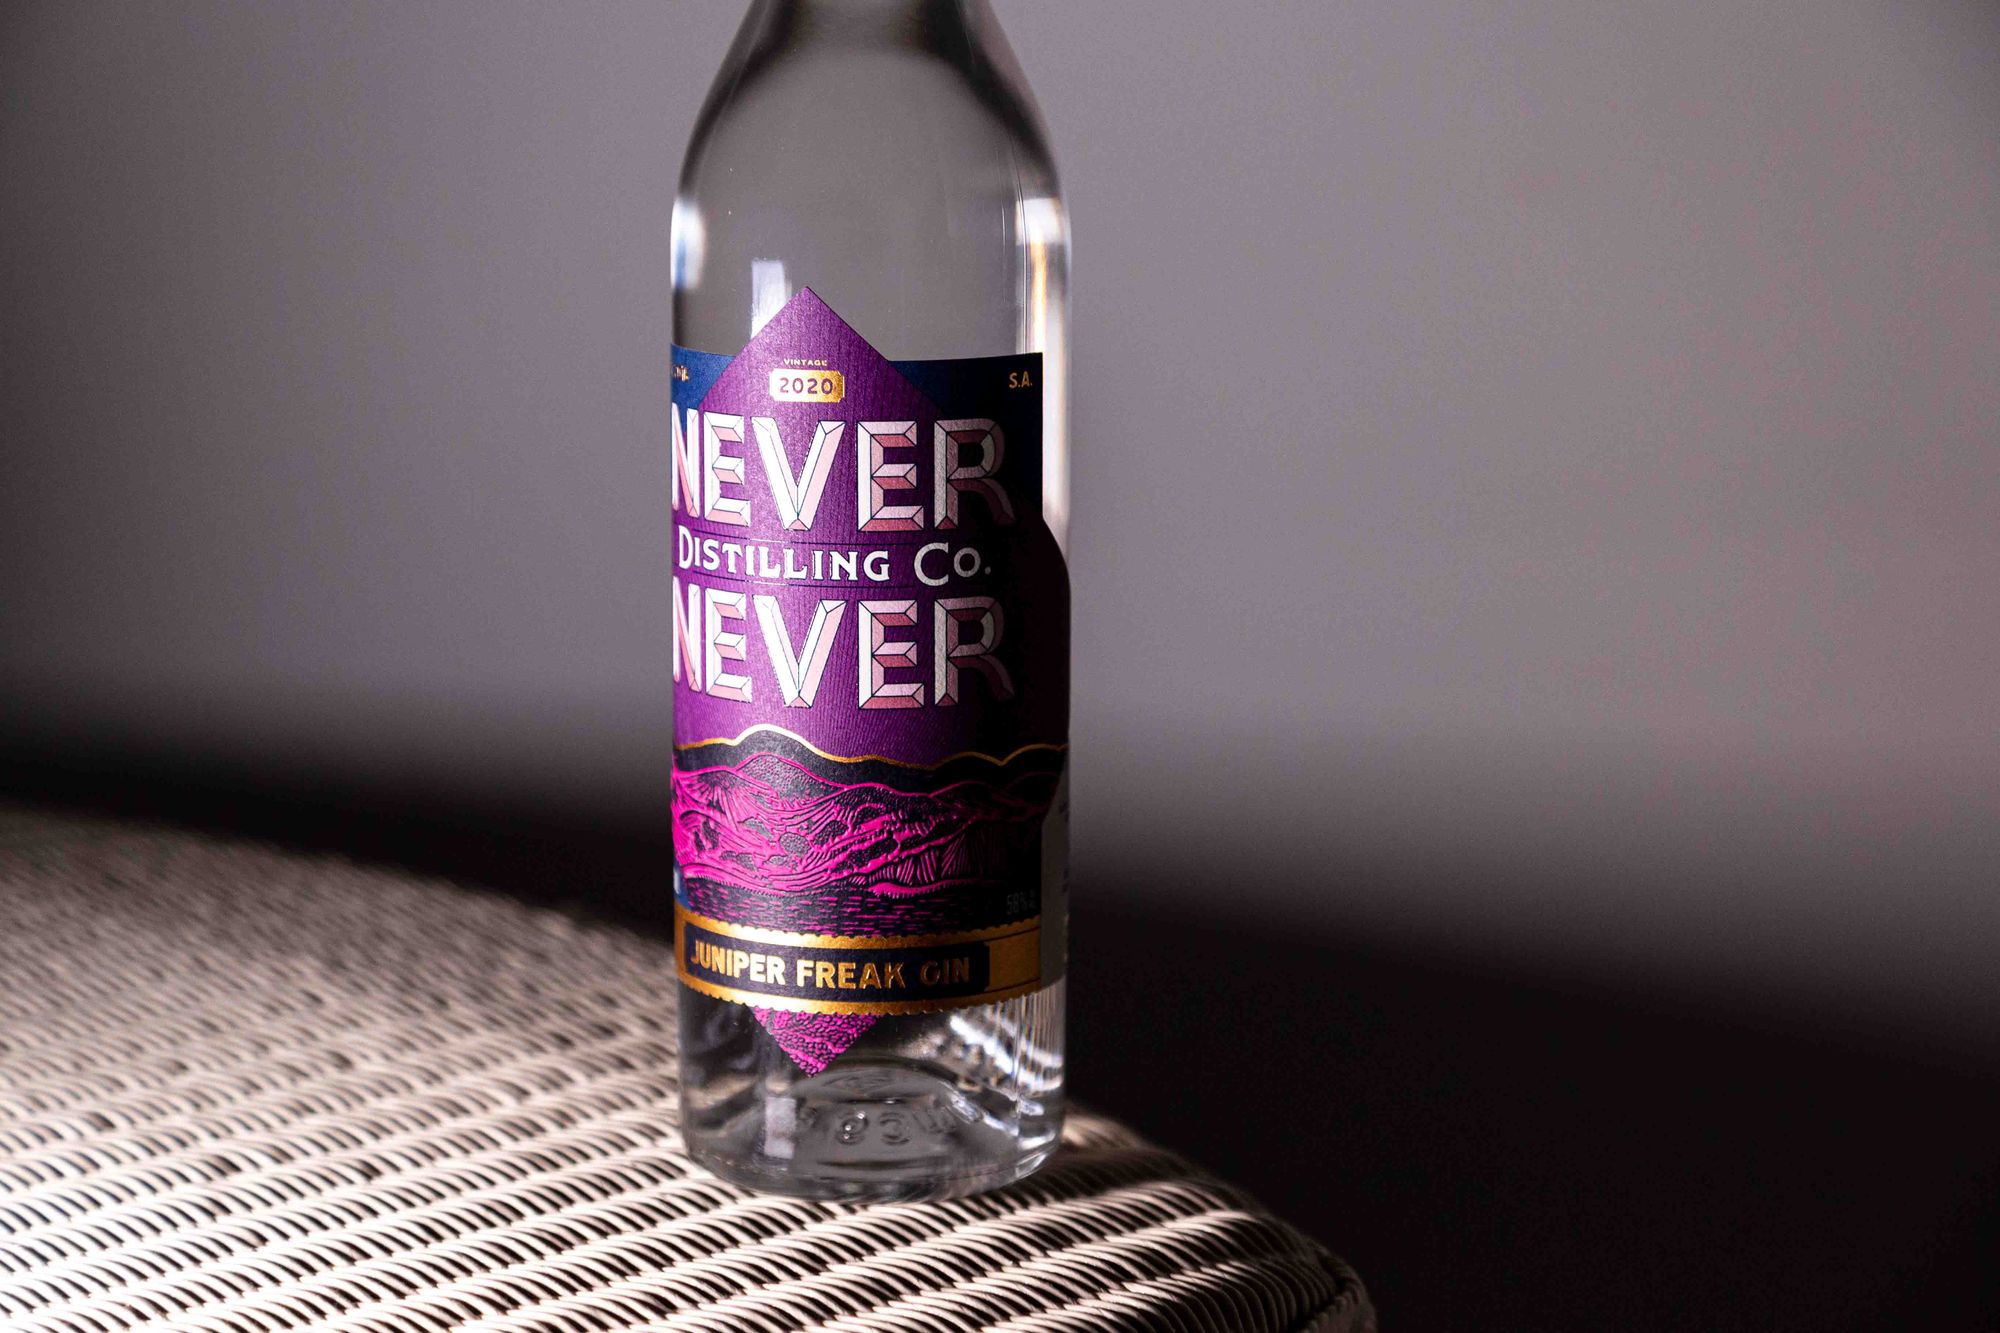 Bottles of Note: our Never Never Distilling Co. Juniper Freak Gin 2020 review